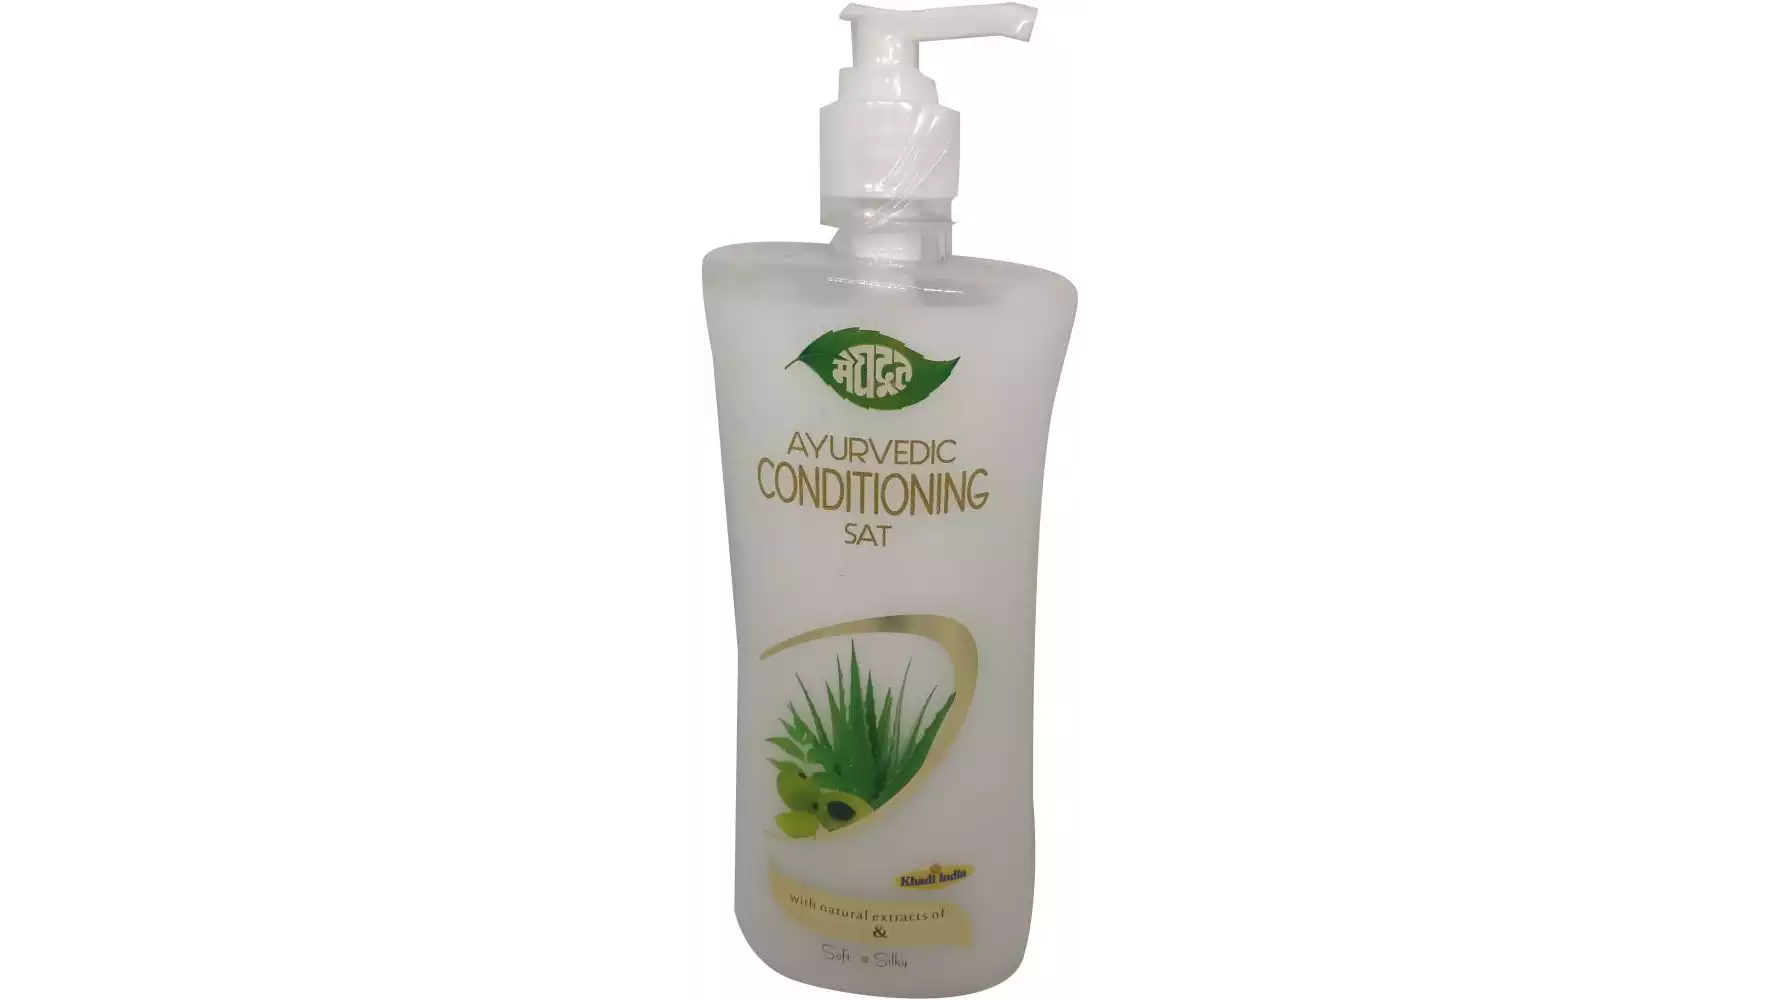 Meghdoot Ayurvedic Conditioning Shampoo (500g)